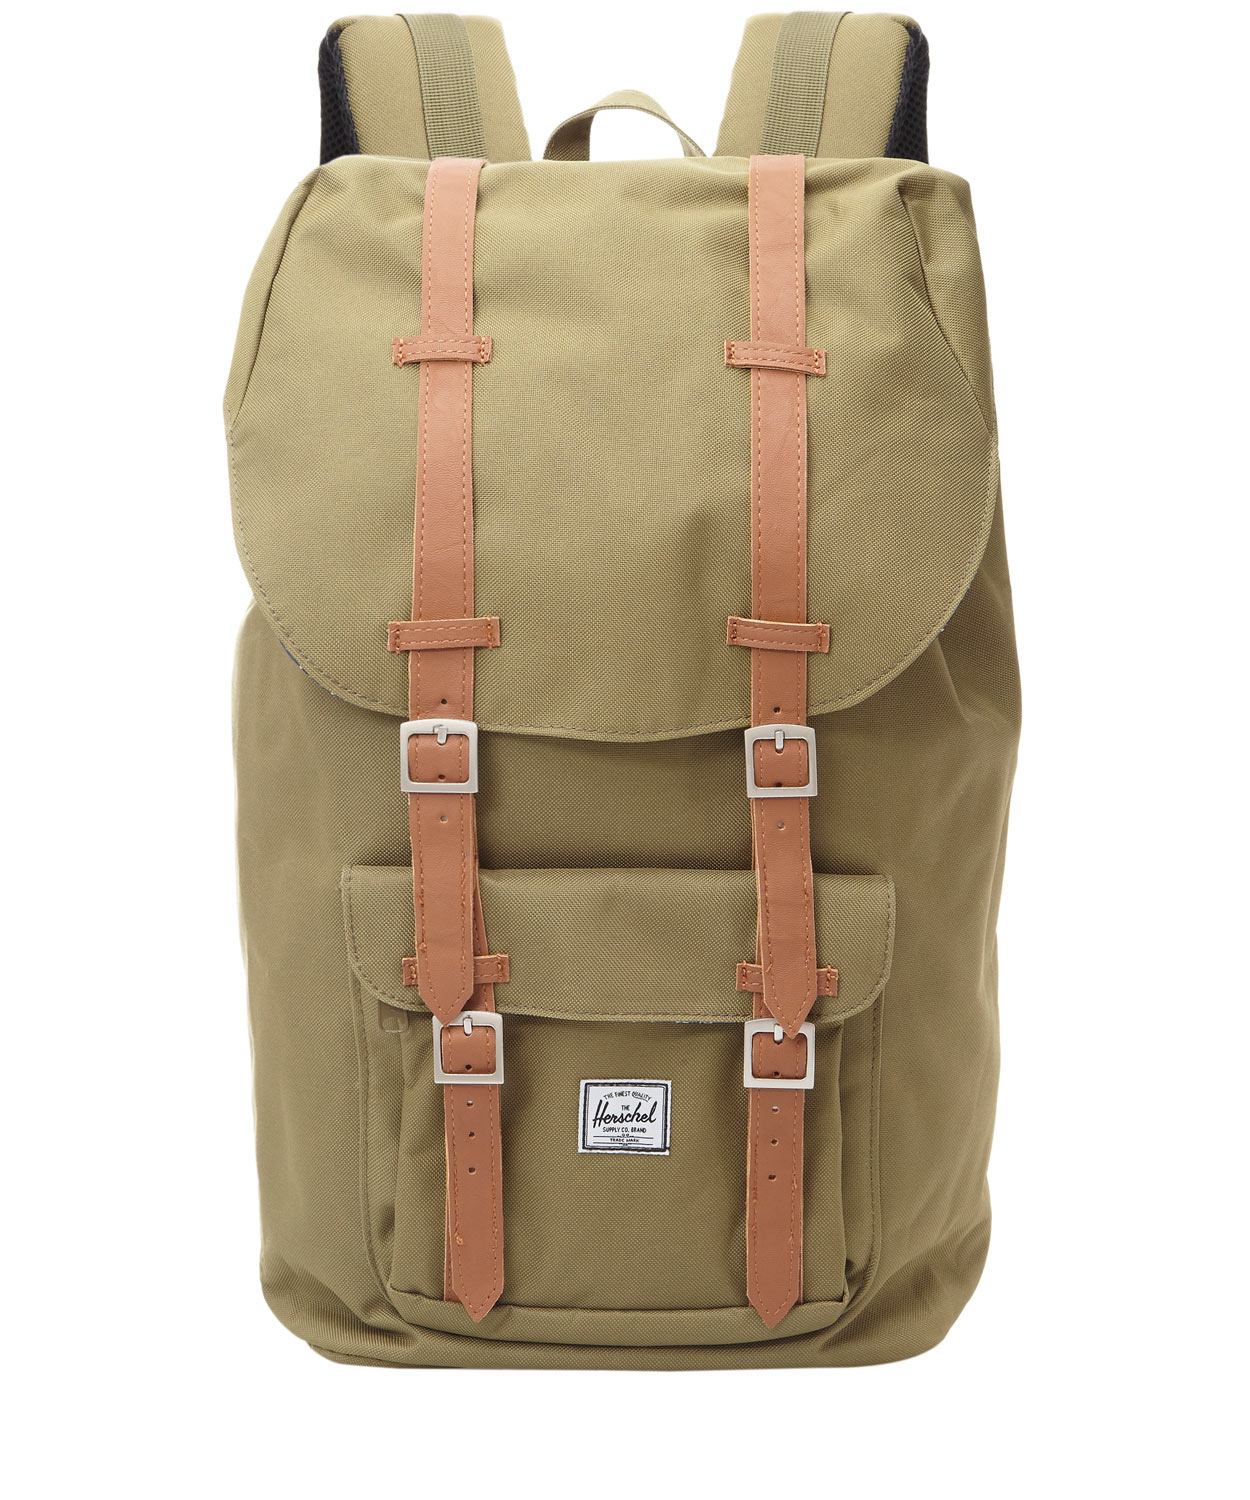 Lyst - Herschel Supply Co. Khaki Little America Backpack in Natural for Men